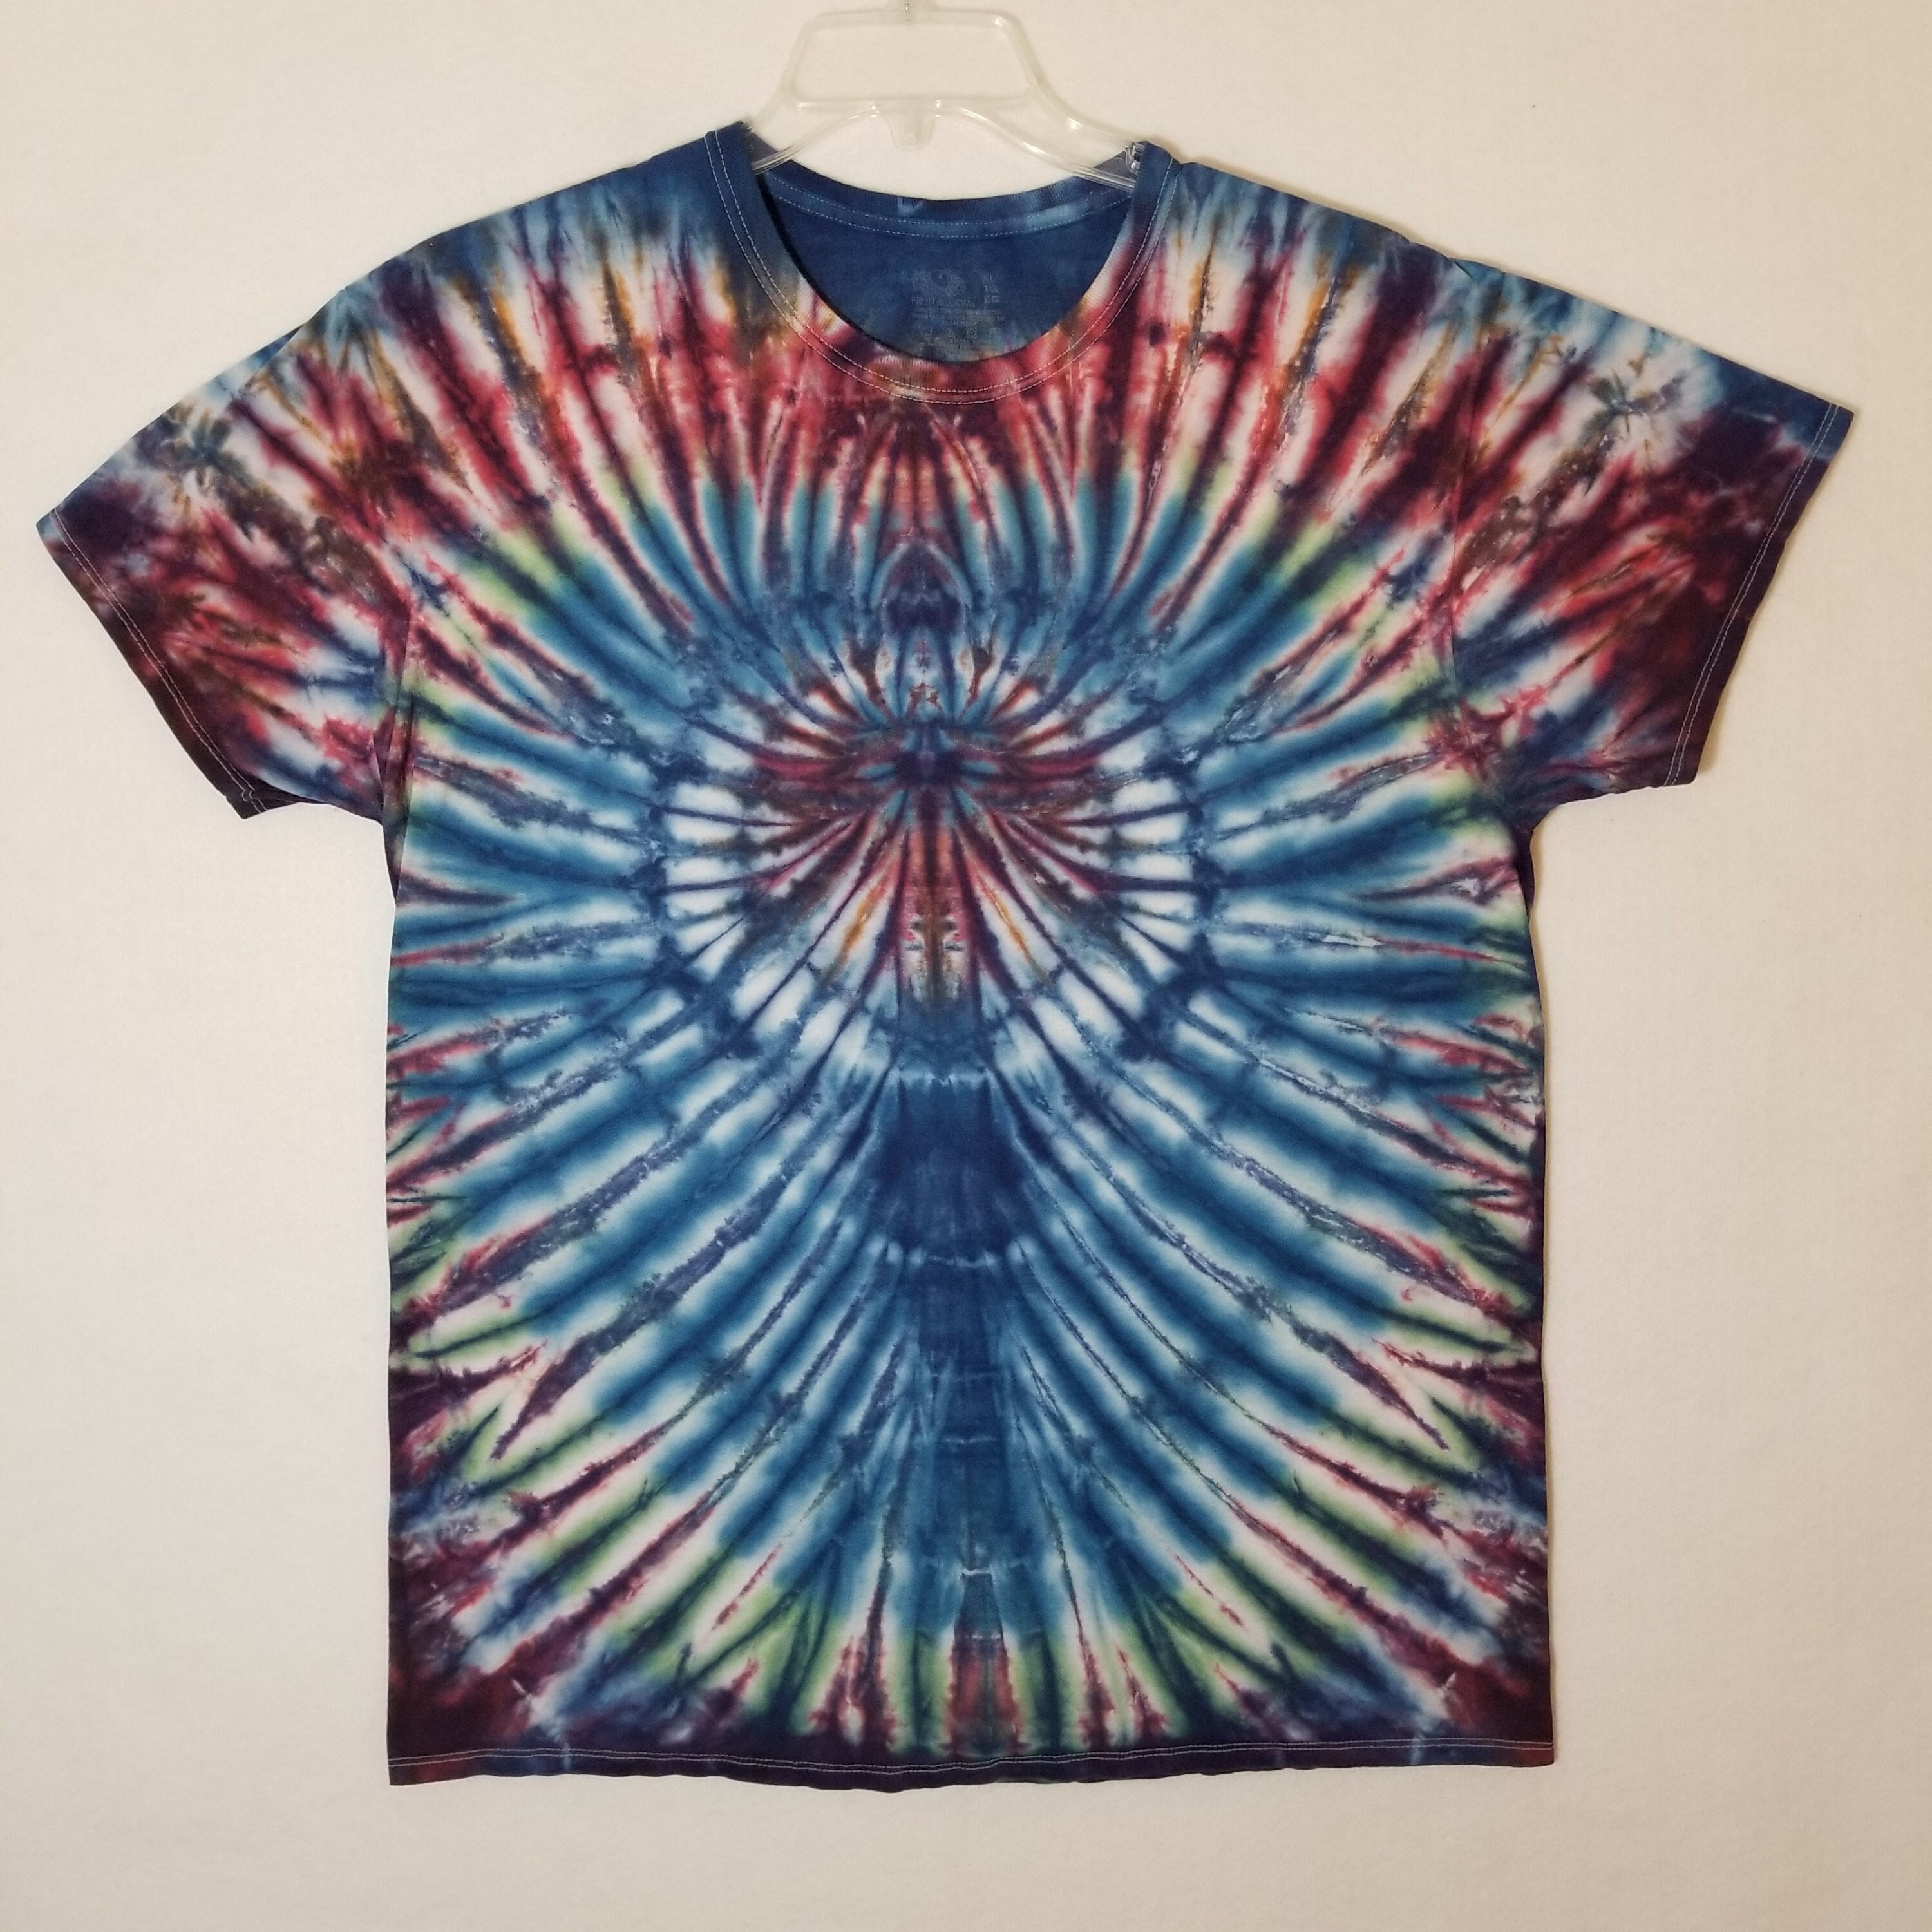 XL Tie Dye T-Shirt Vibrant Spider Design | Etsy